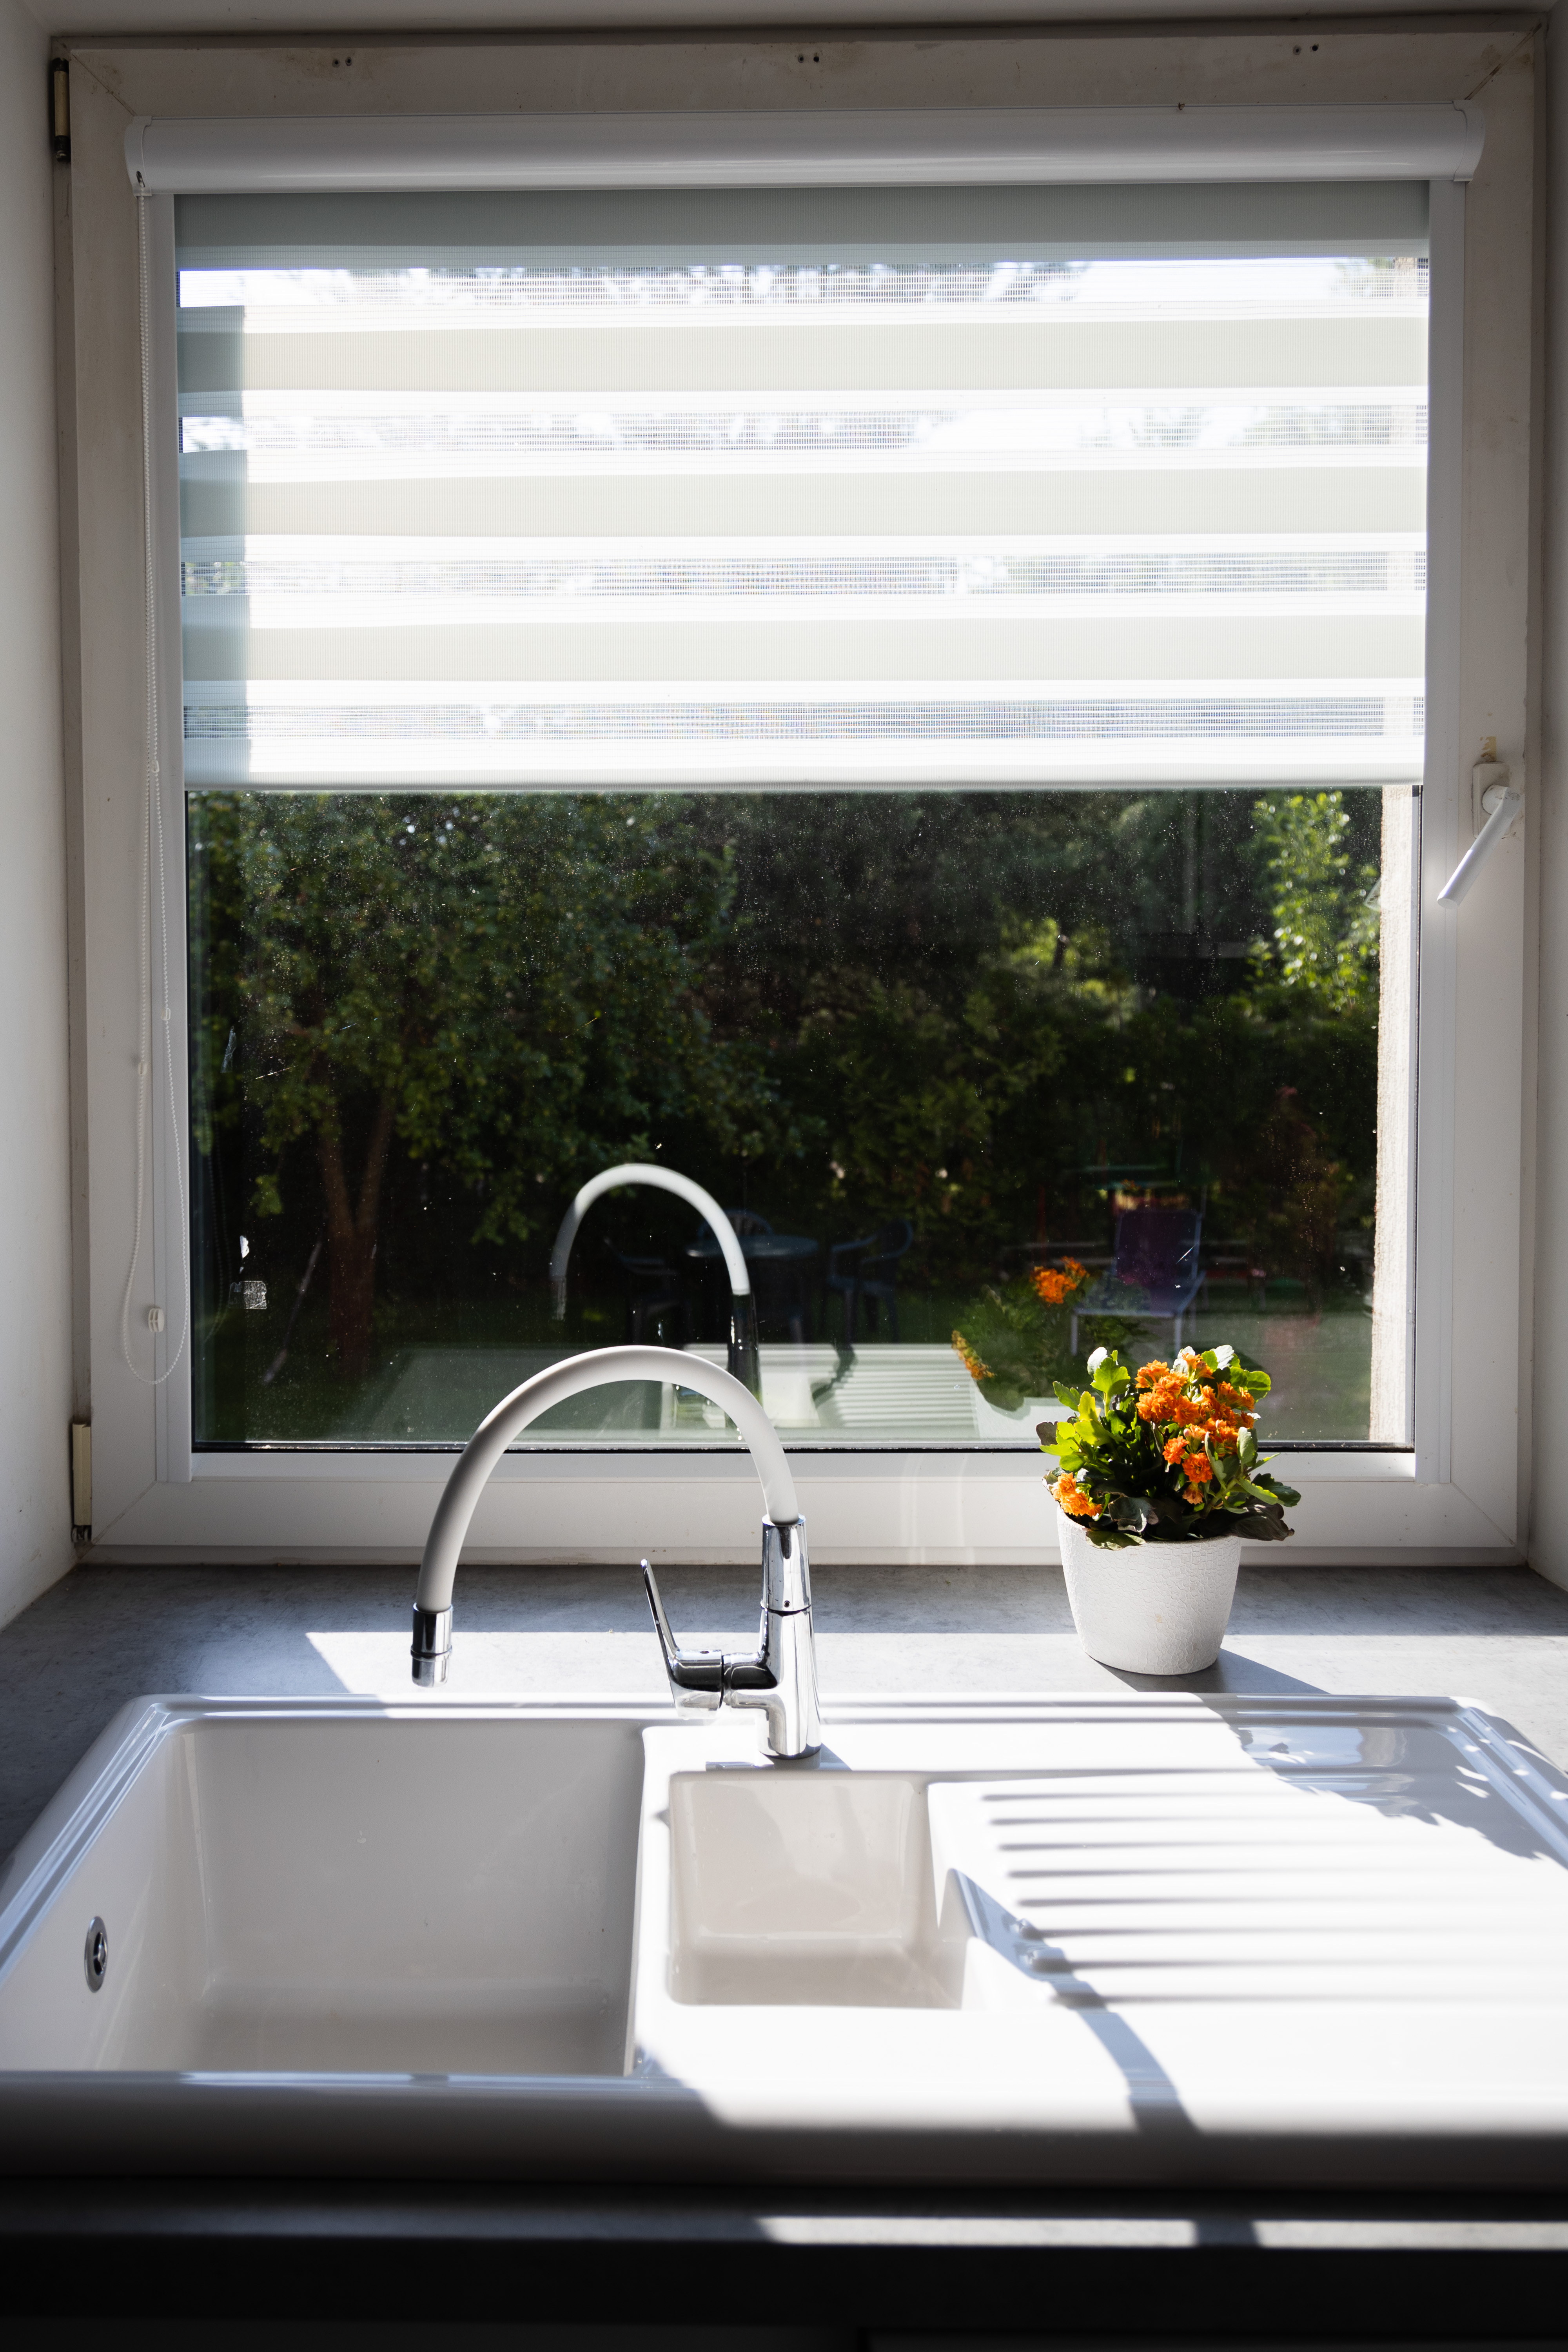 A kitchen sink under a window | Source: Getty Images